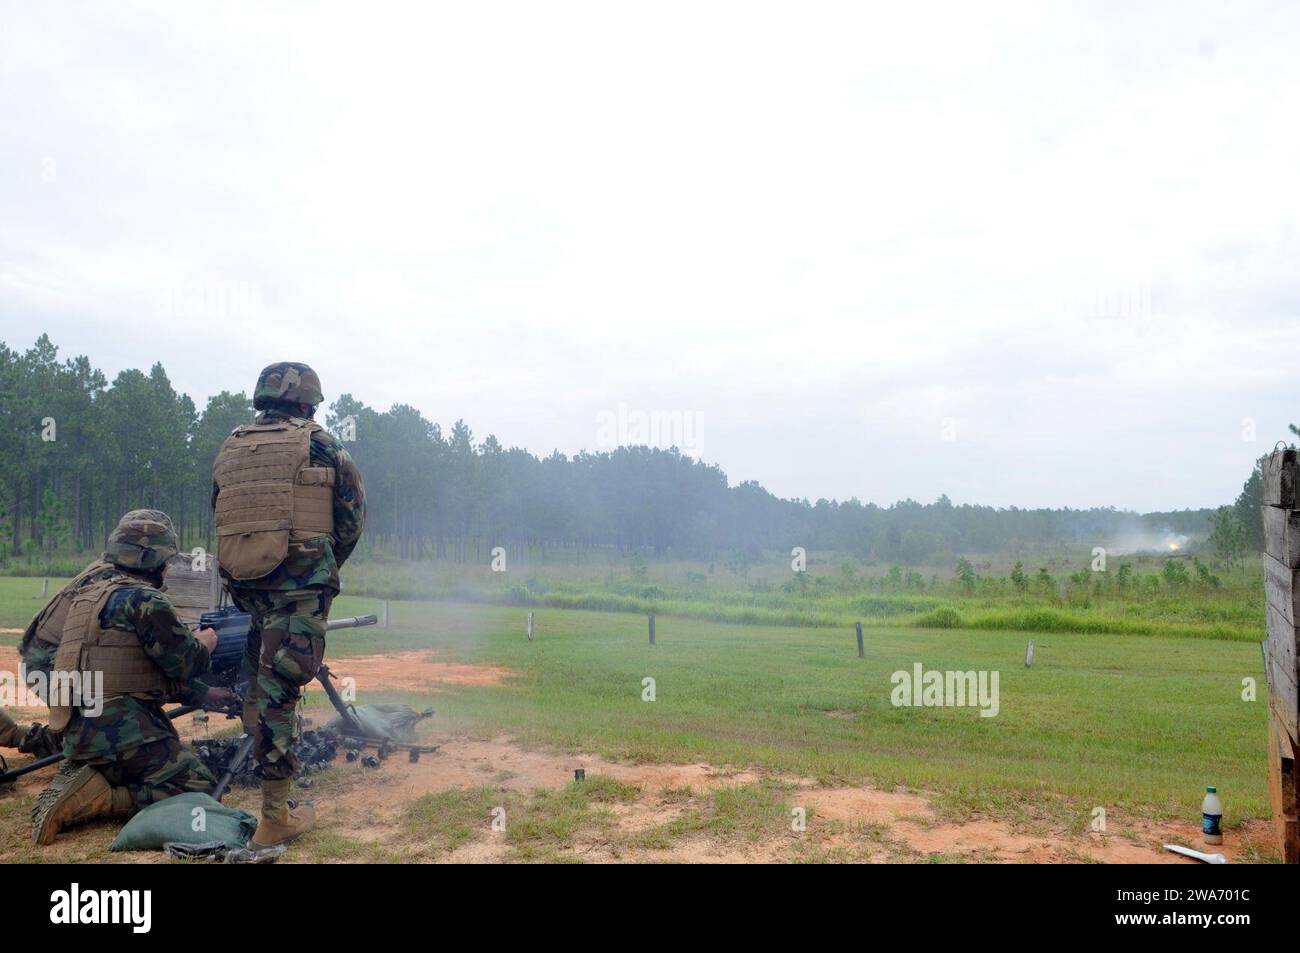 US military forces. 110902UH337-099 - NMCB 11 at MK19 firing range (Image 15 of 27). Stock Photo